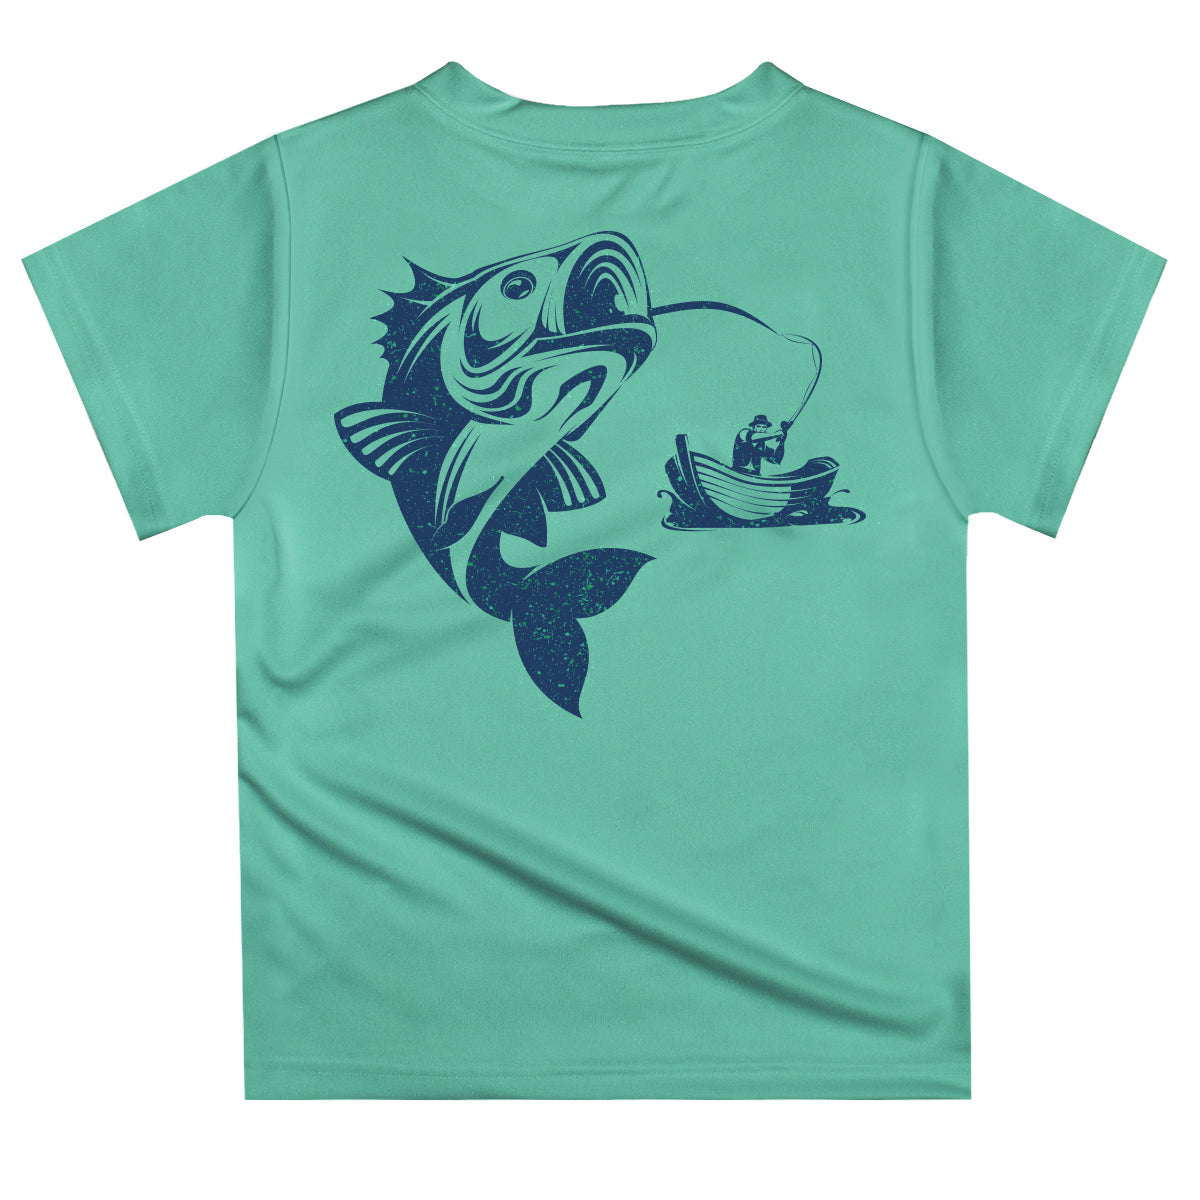 Fishing Green Short Sleeve Tee Shirt With Pocket - Wimziy&Co.